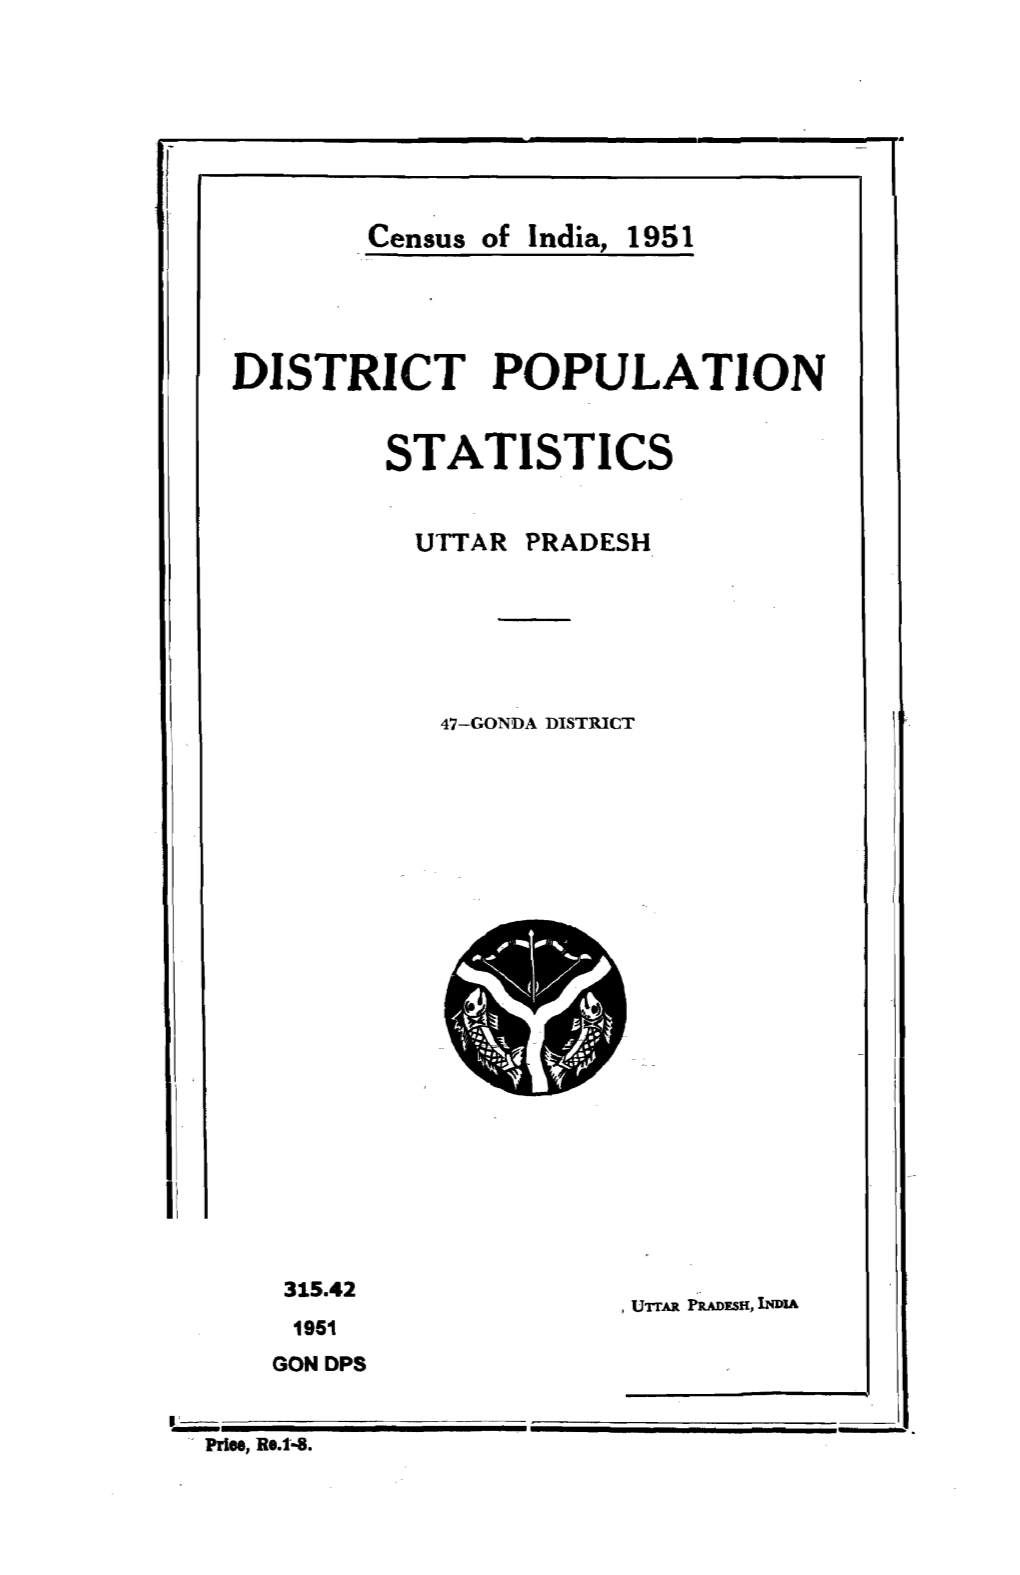 District Population Statistics, 47-Gonda, Uttar Pradesh